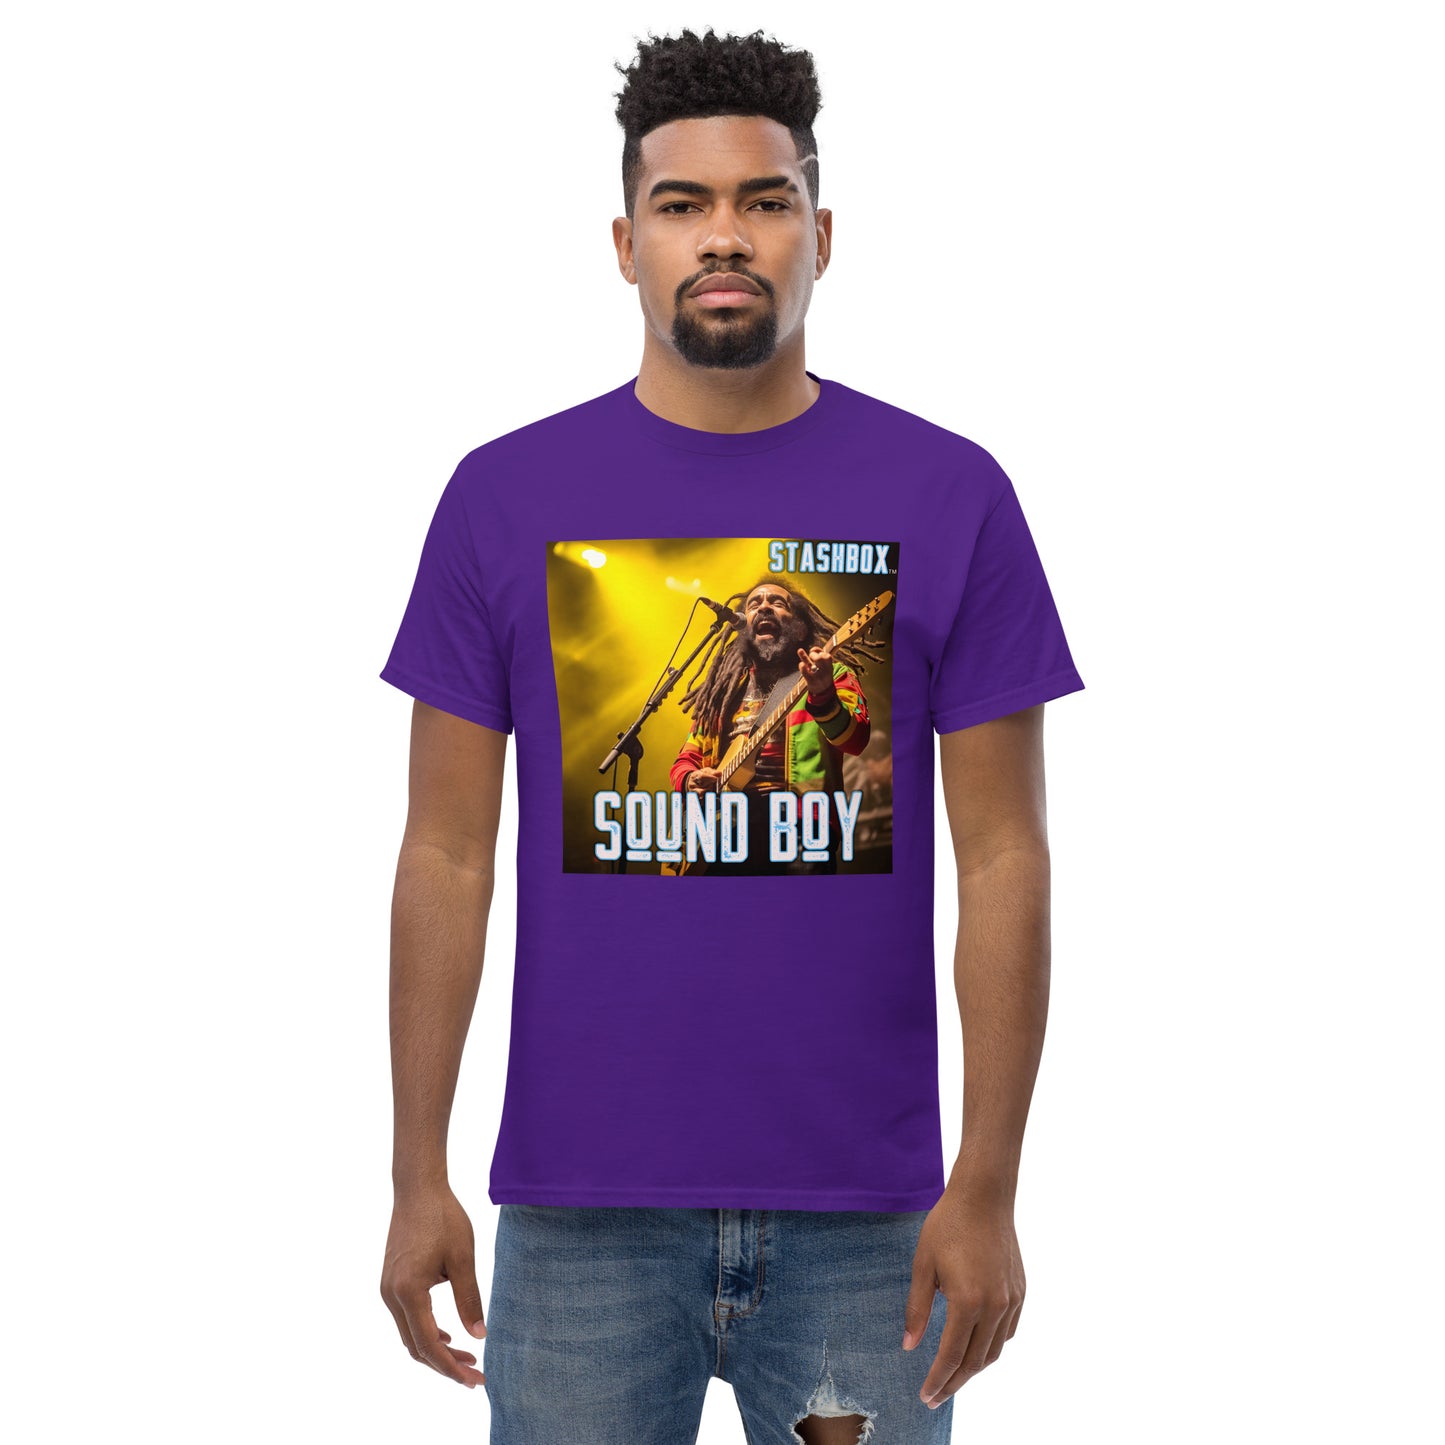 Men's Classic T-Shirt Sound Boy Stashbox 007